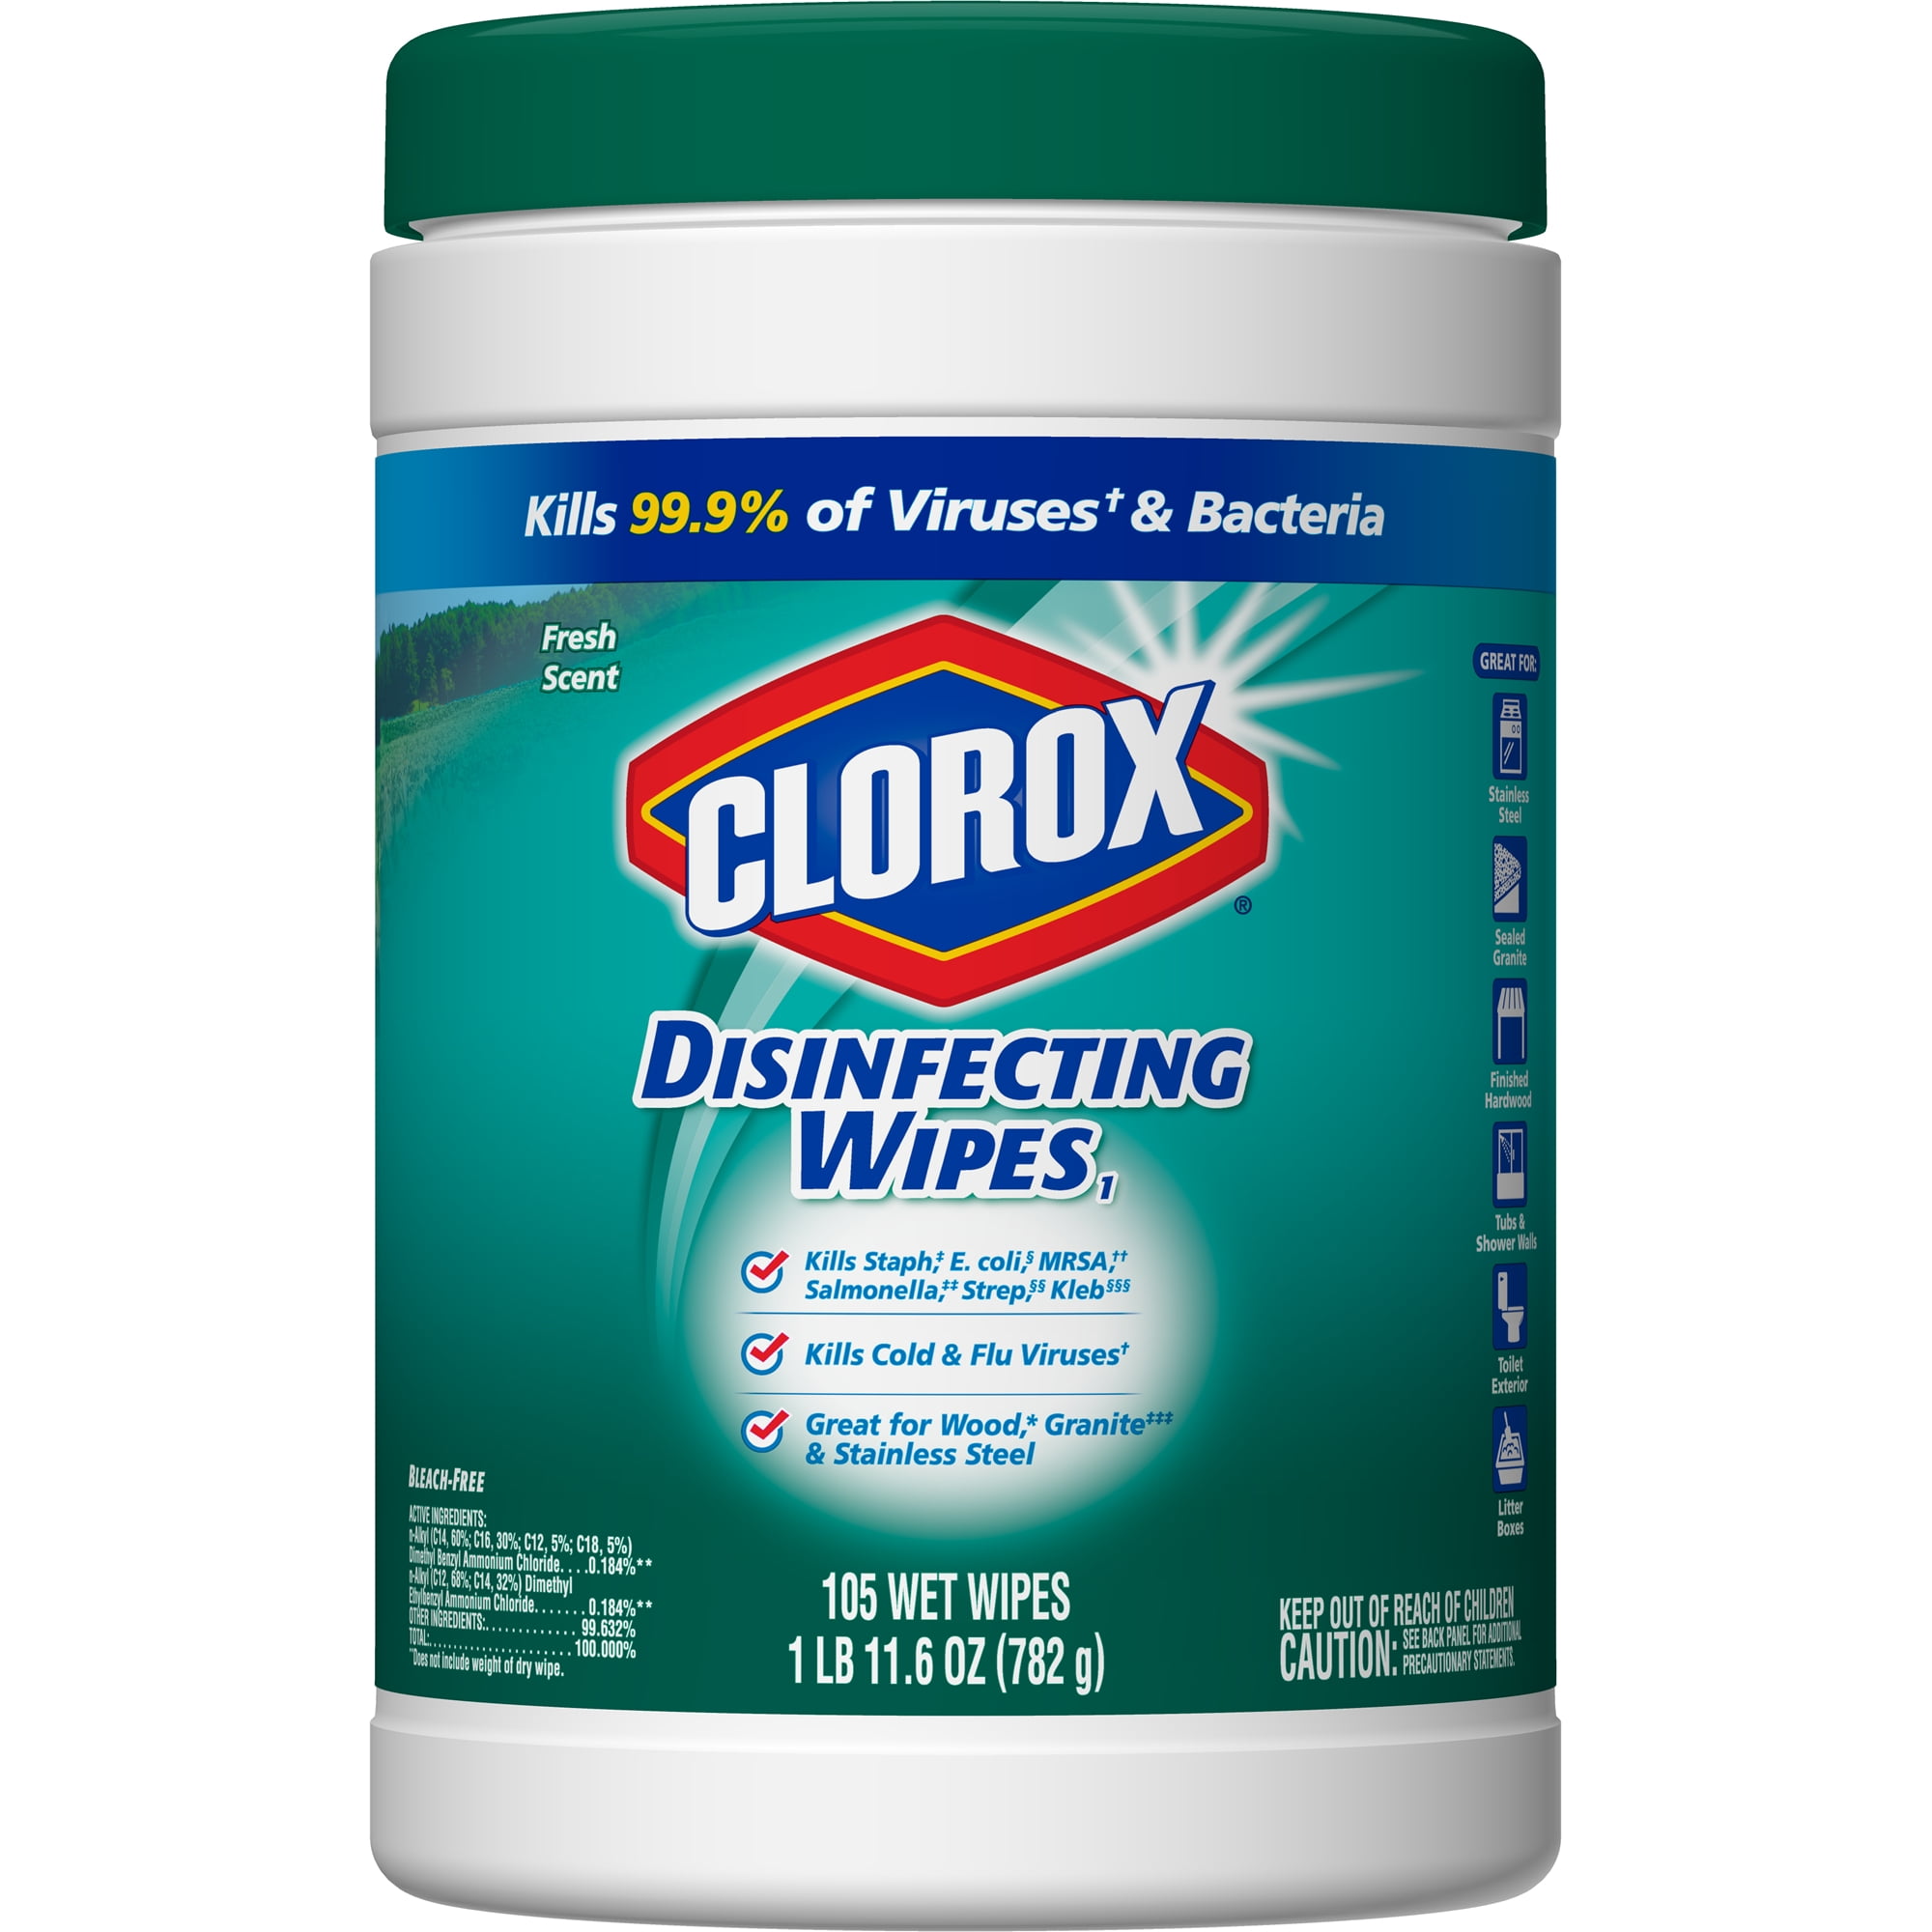 Cleaning wipes. Дезинфицирующие салфетки Clorox. Disinfectant wipes. 3m 105 wipes состав.